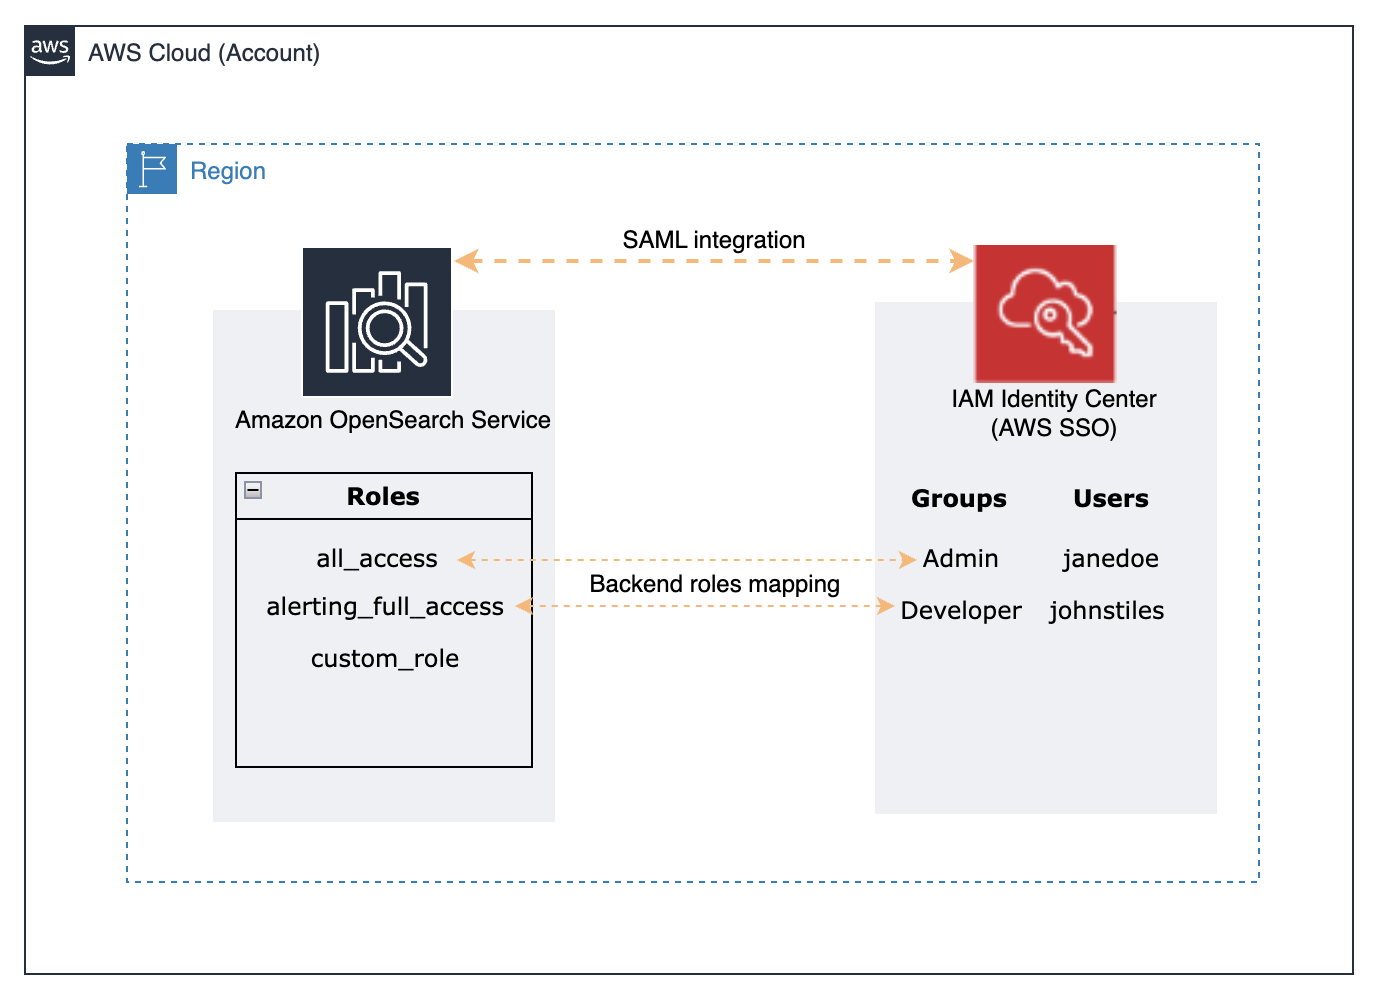 Role-based access control in Amazon OpenSearch Service via SAML integration with AWS IAM Identity Center